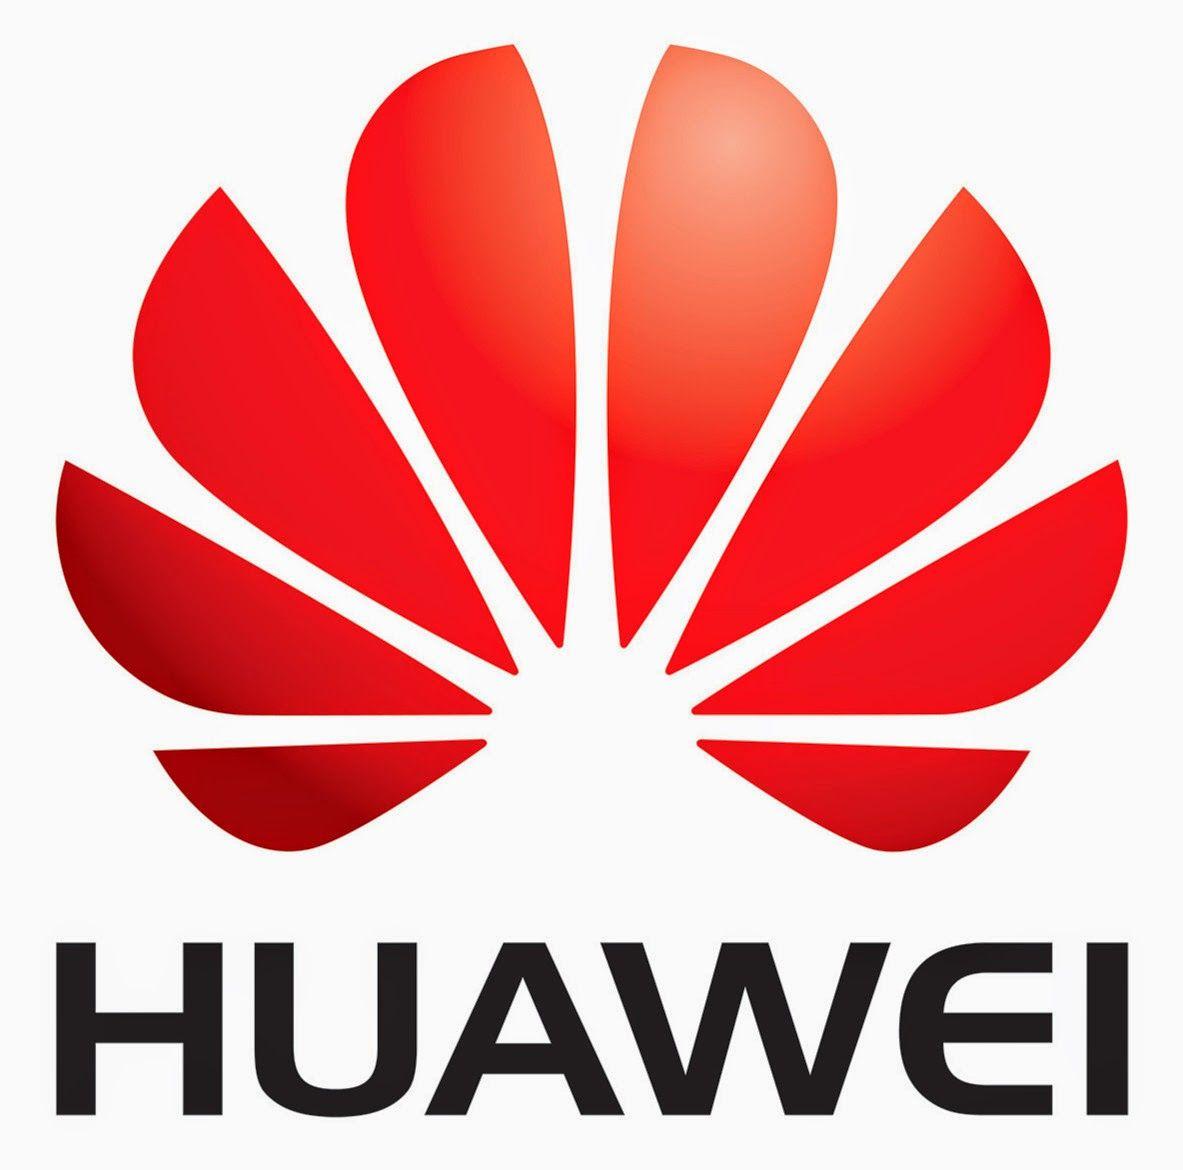 Phone Brand Logo - Amazing Huawei Brand Logos Image With Names. Brand Logos Picture